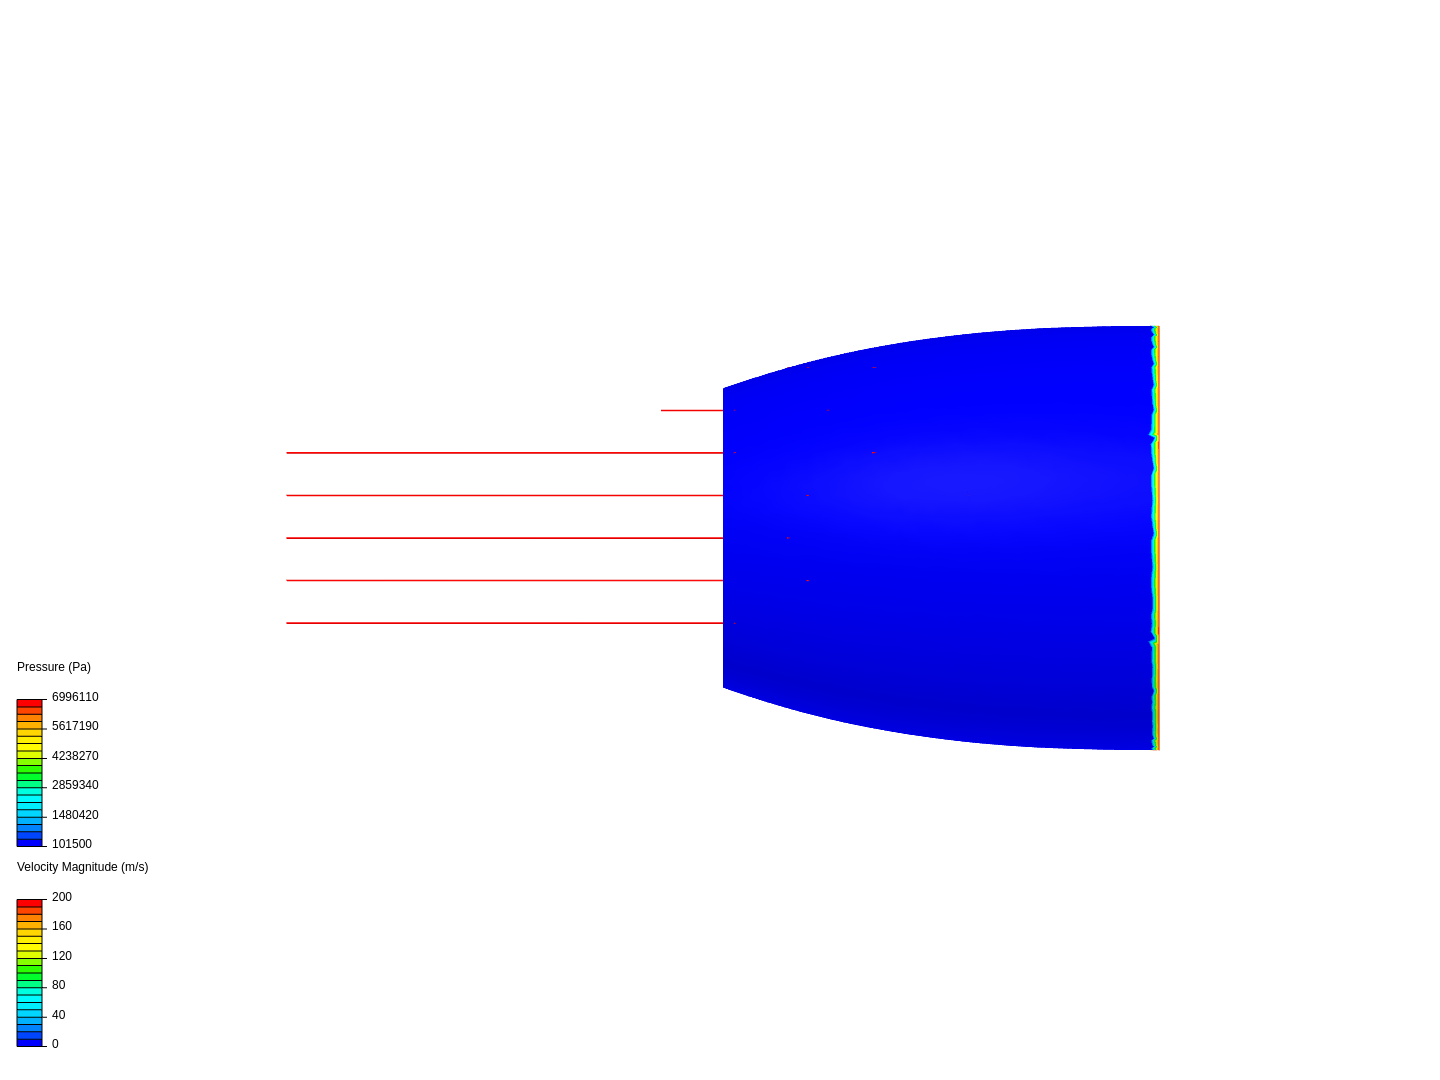 Supersonic Nozzle image